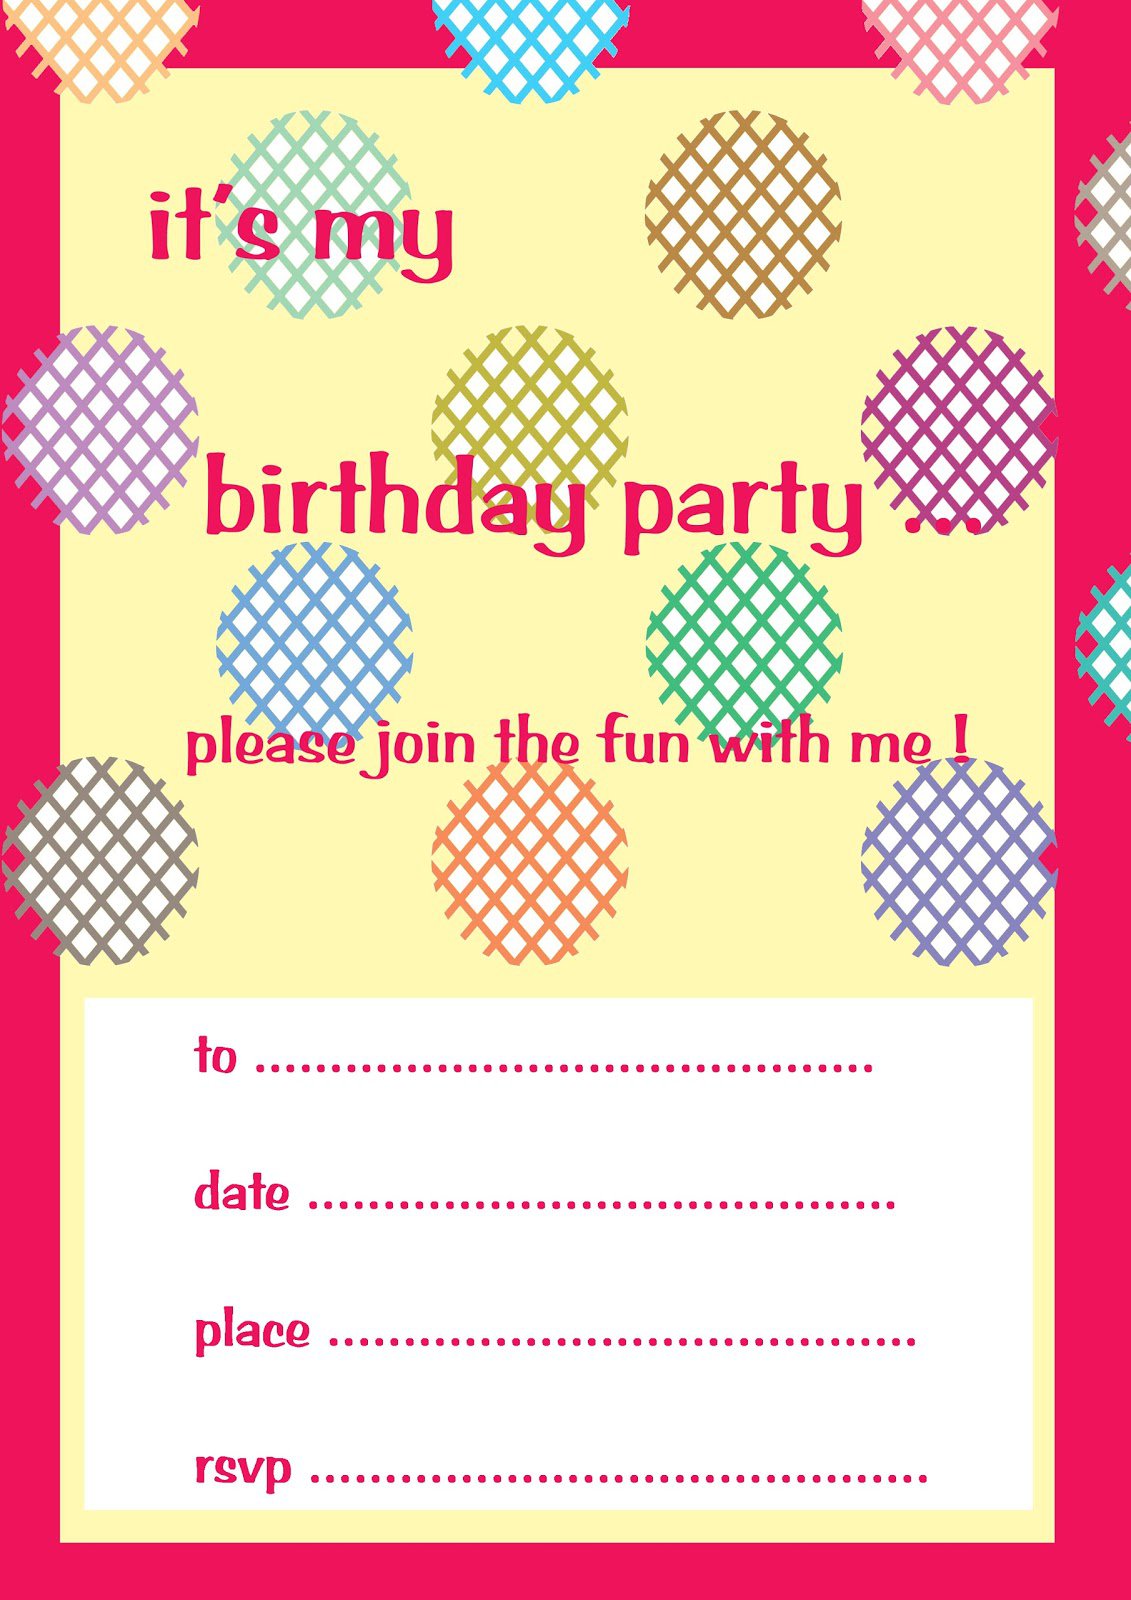 Printable Invitations For Kids Party - Invitation Design Blog